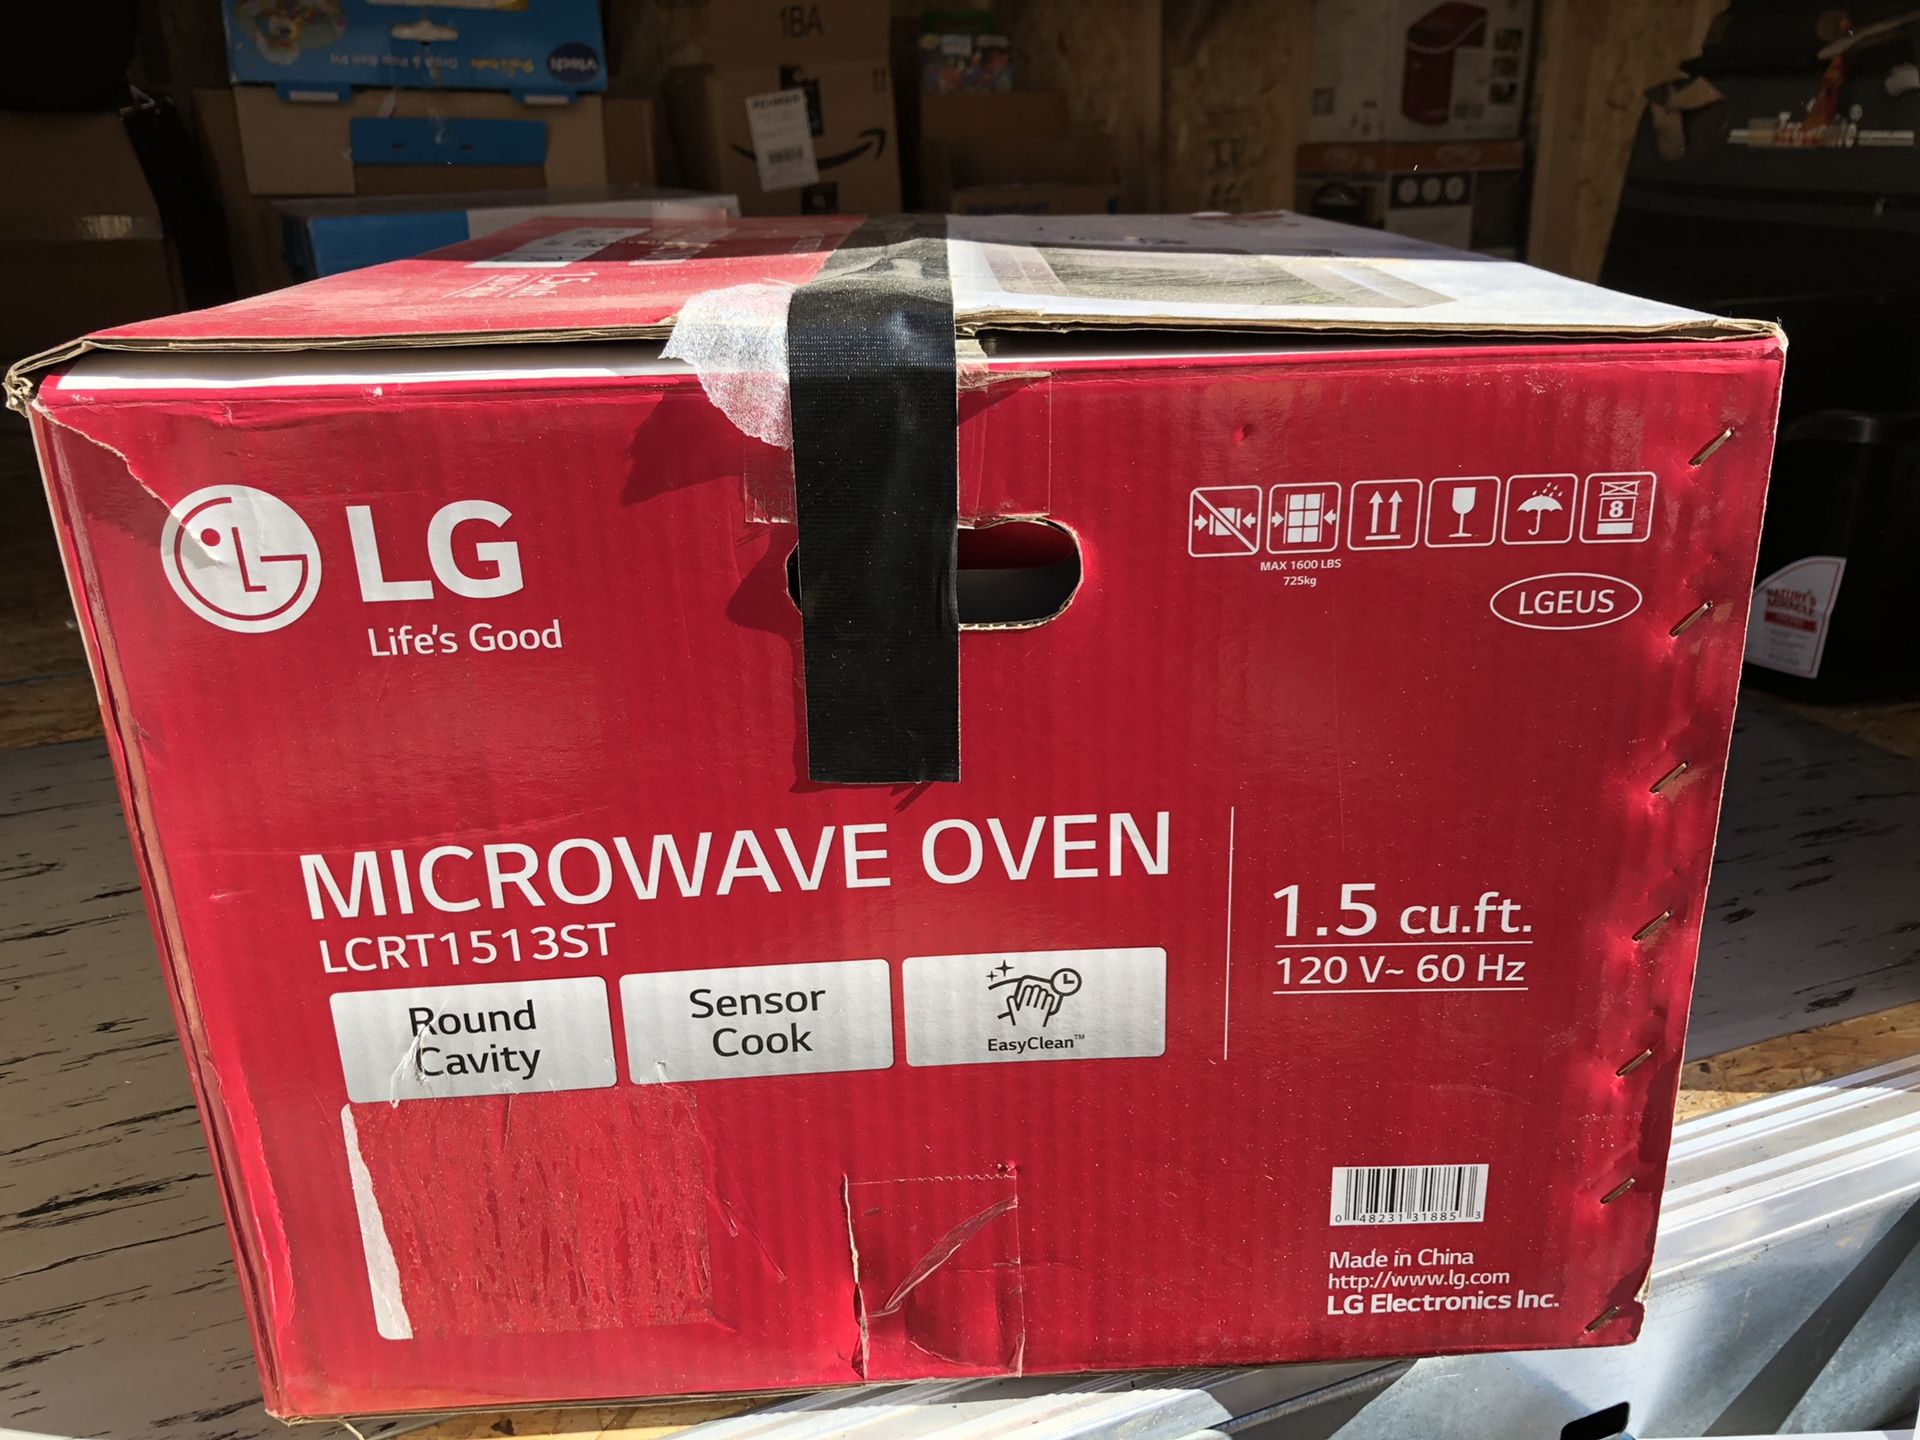 LG Microwave pavement 1.5 cu.ft